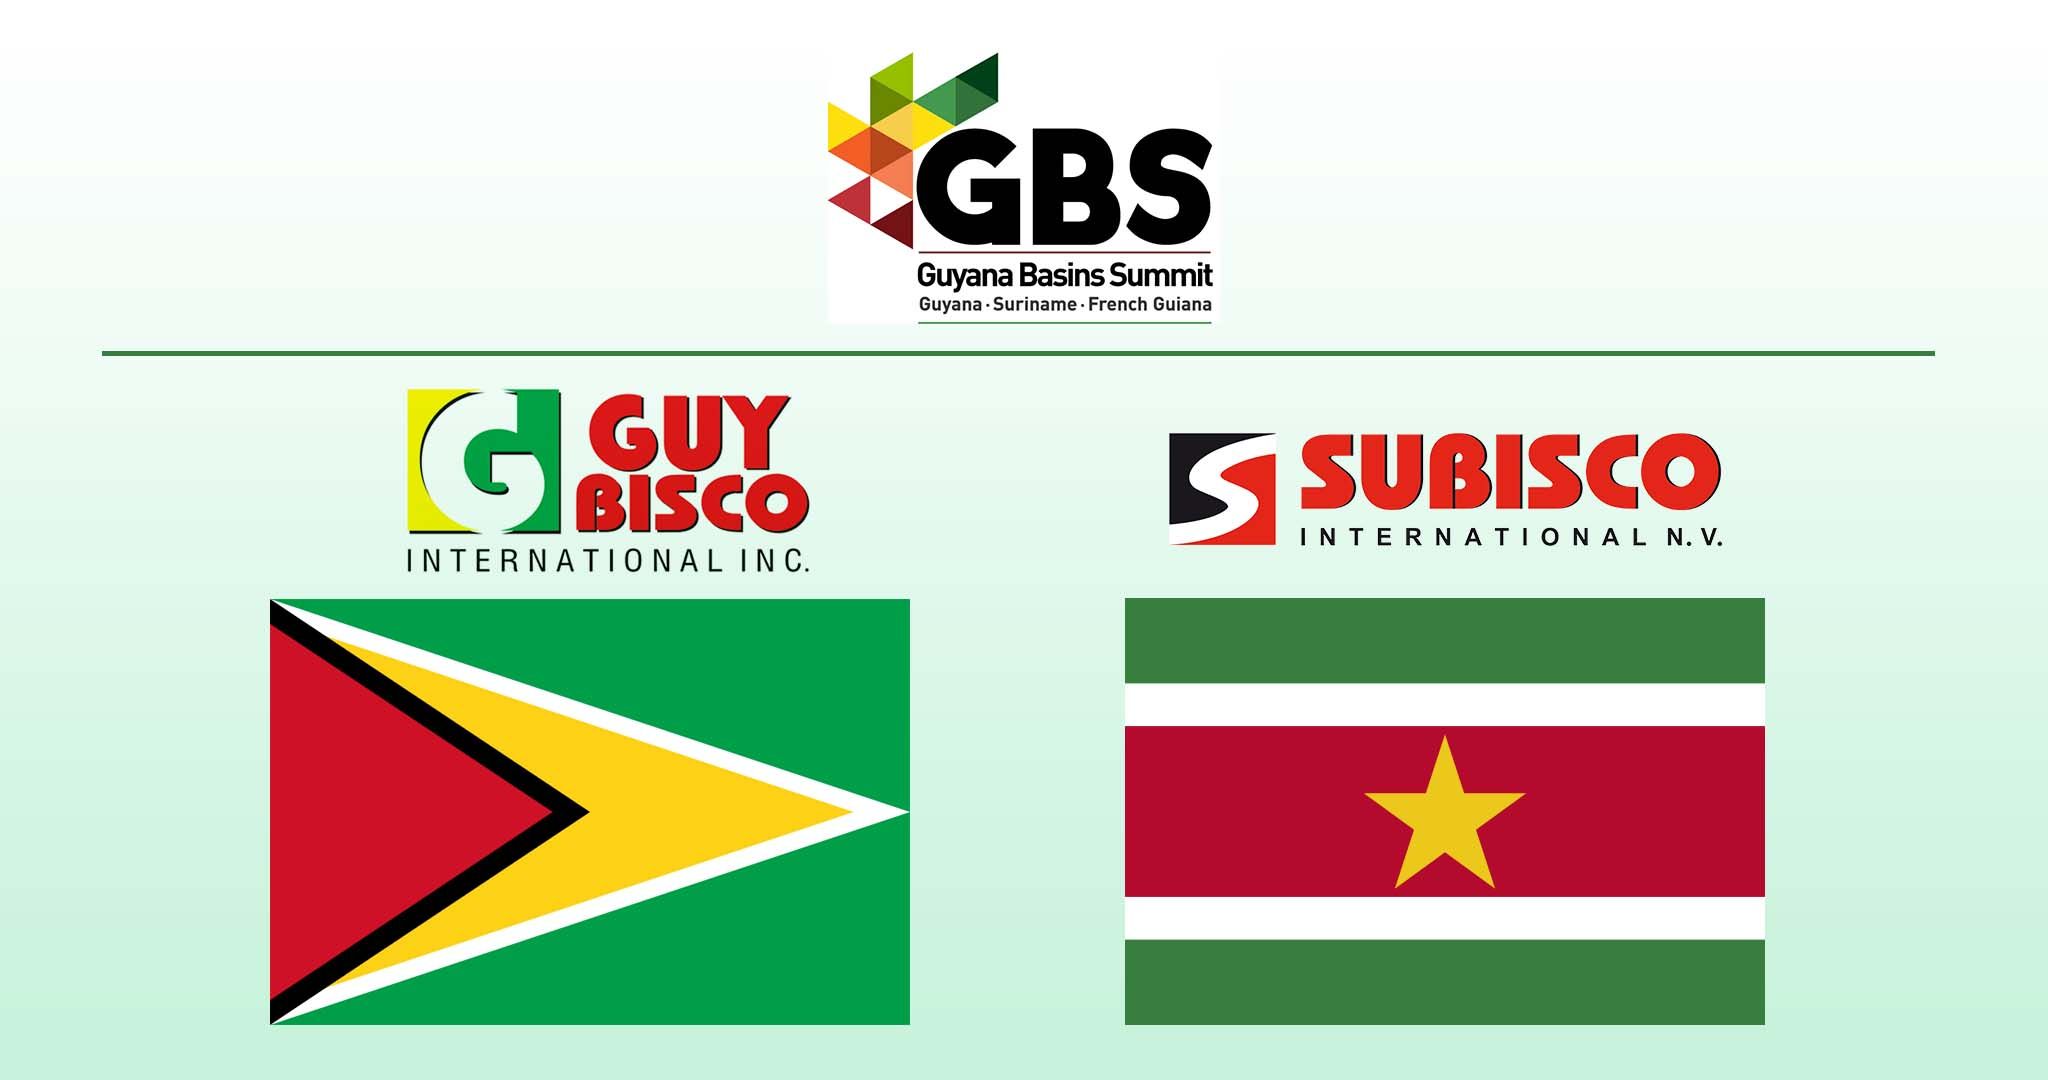 Subisco International N.V. & Guybisco Inc. 